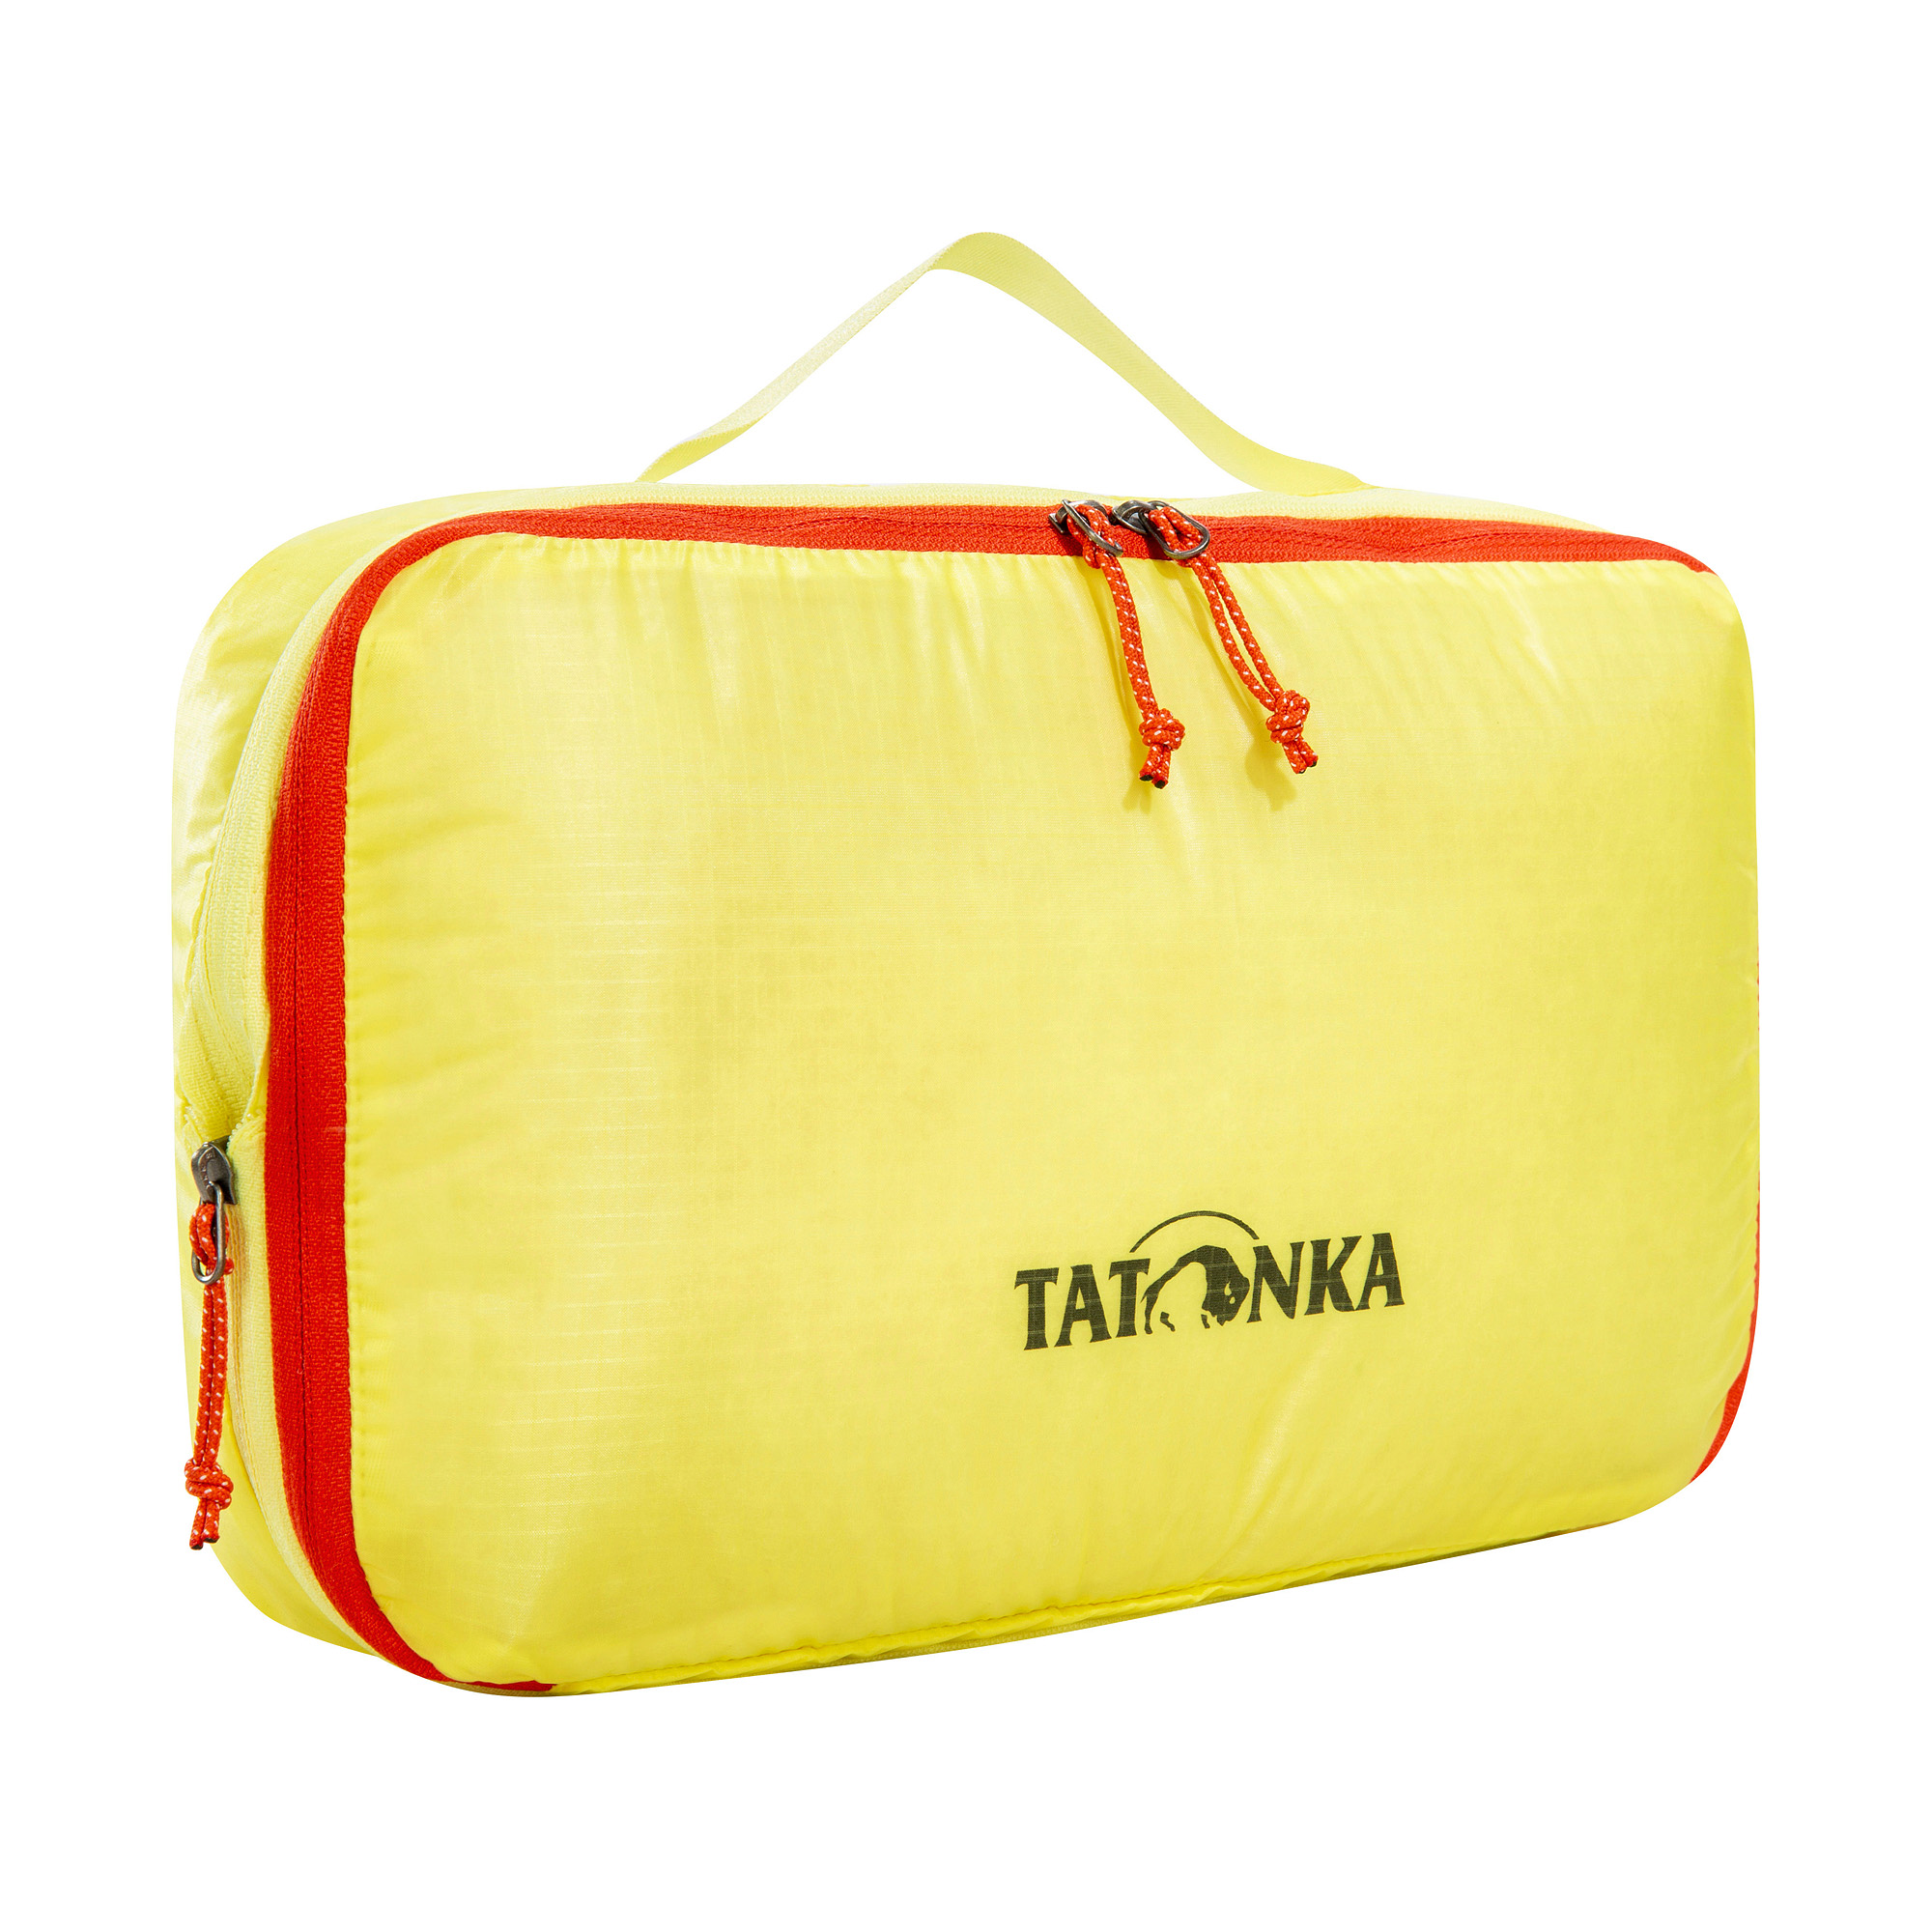 Tatonka SQZY Compression Pouch M light yellow gelb Reisezubehör 4013236374230